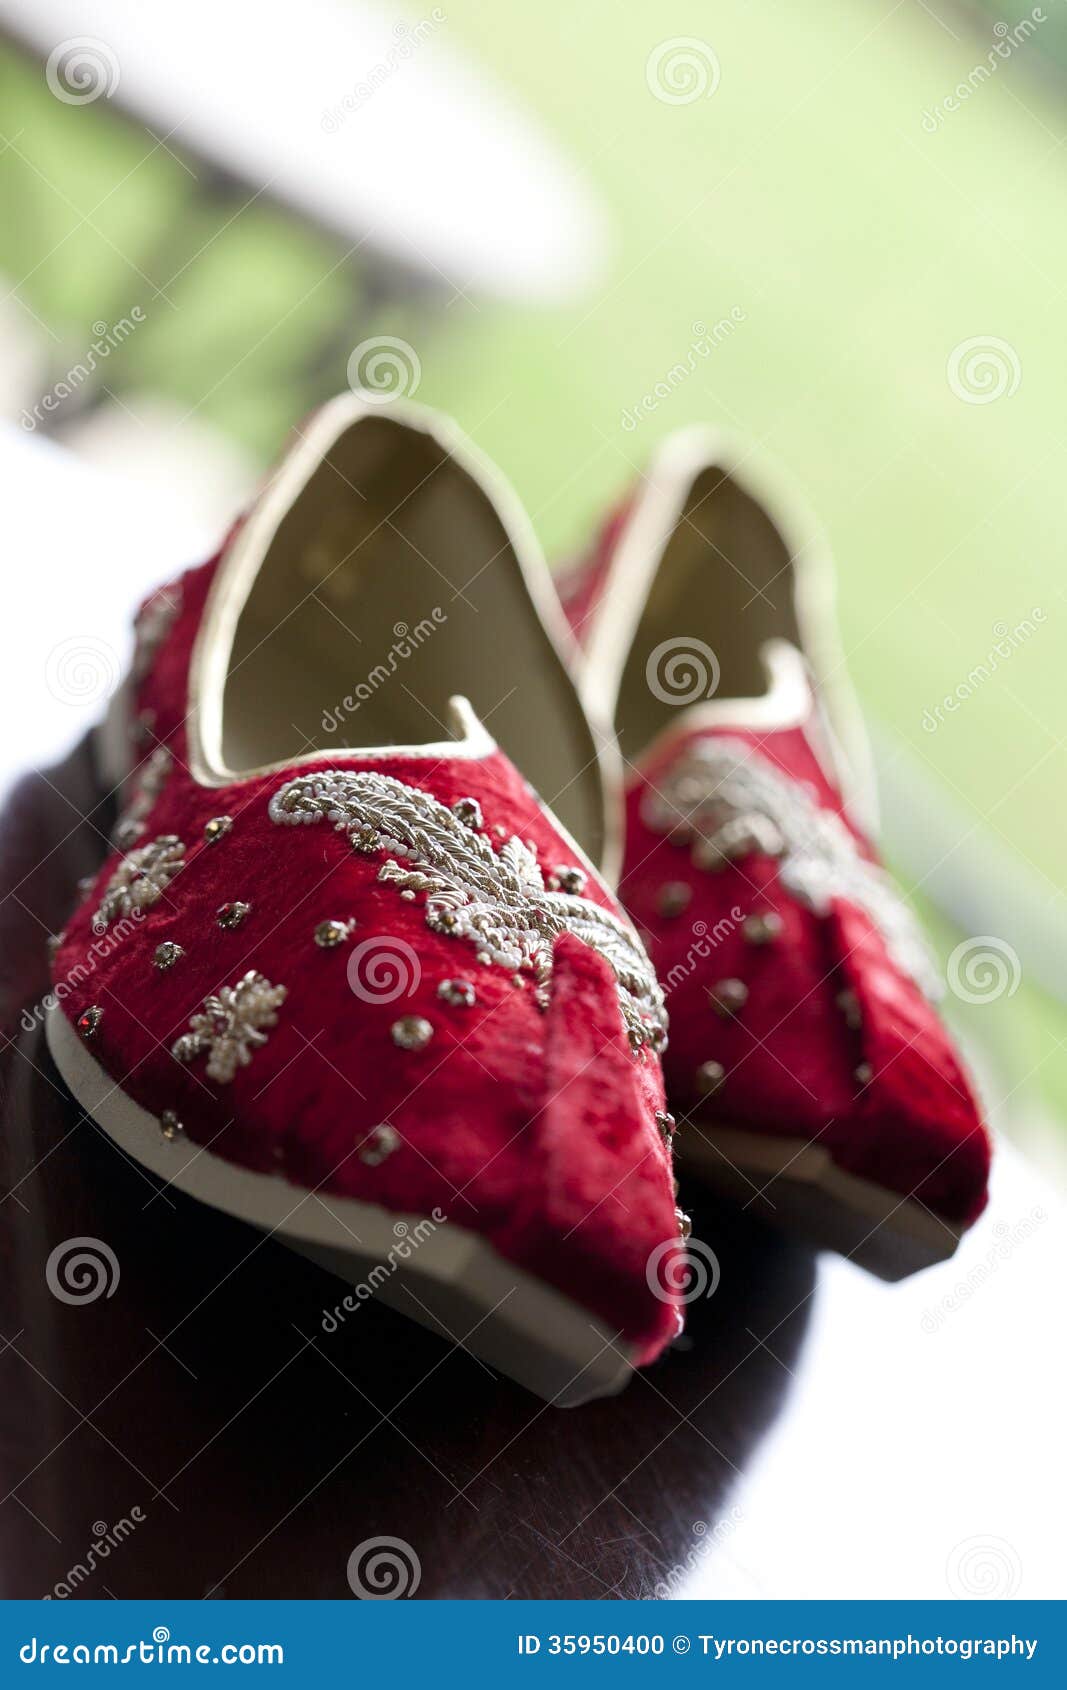 Women Sandals Toe Ring Wedding Wedge Indian Bridal High Heels Comfortable  Shoes | eBay